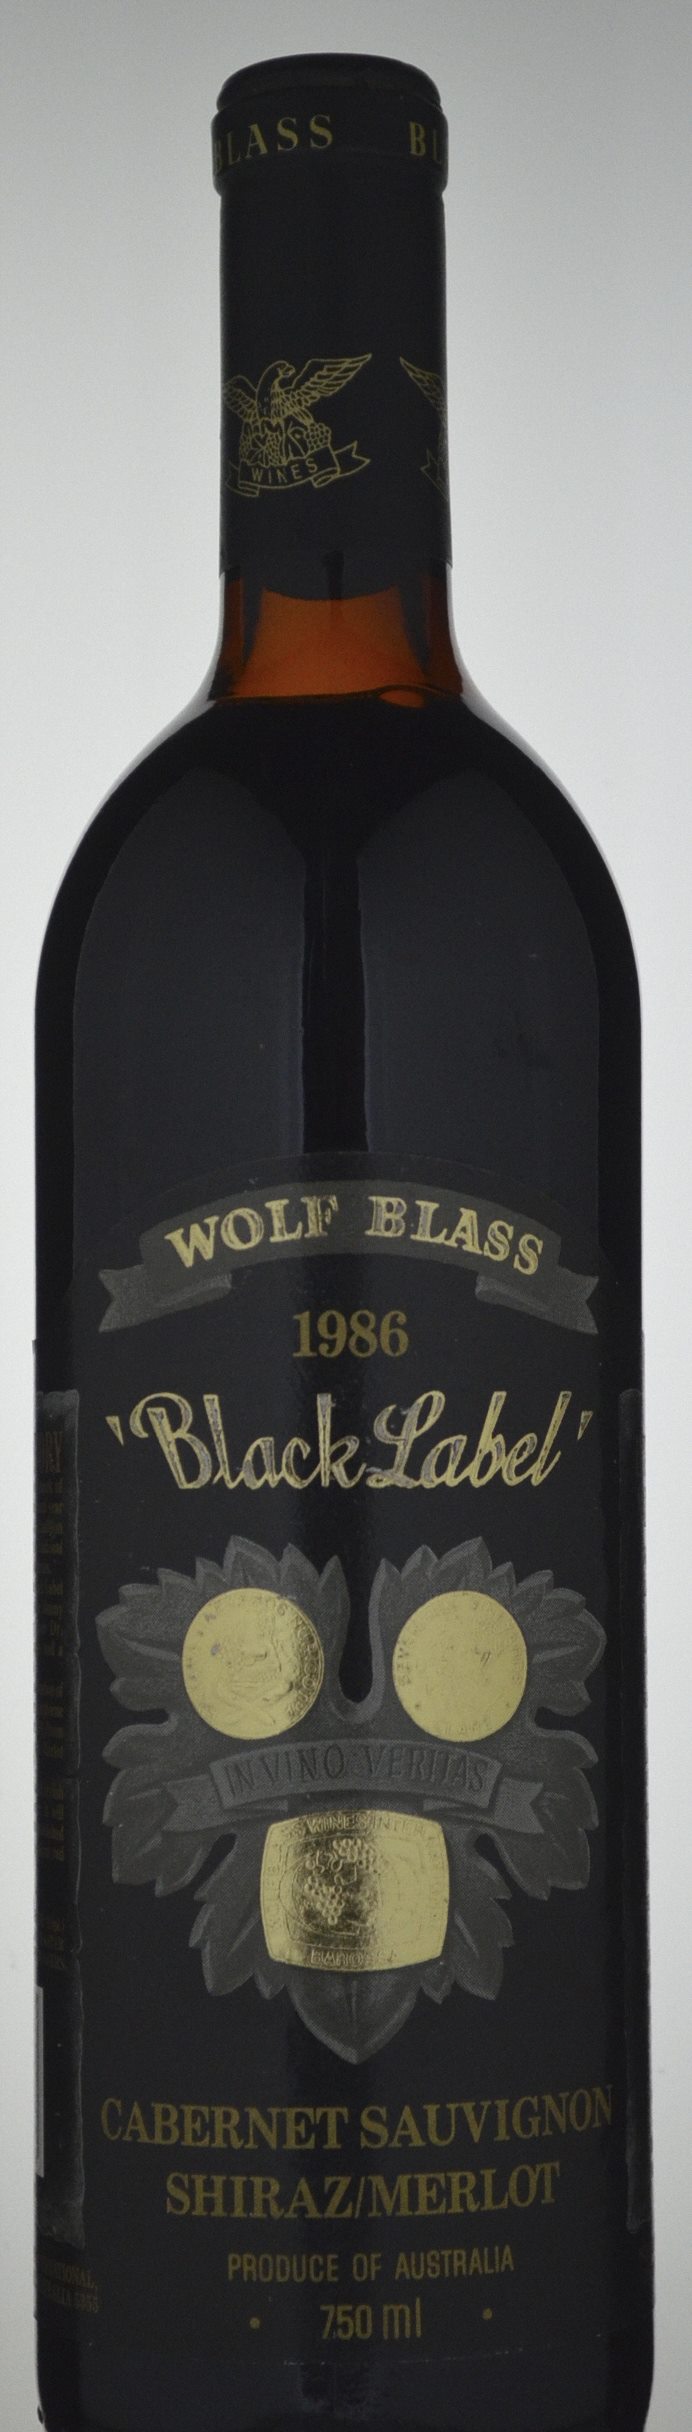 Wolf Blass Black Label Cabernet Shiraz Merlot 1986